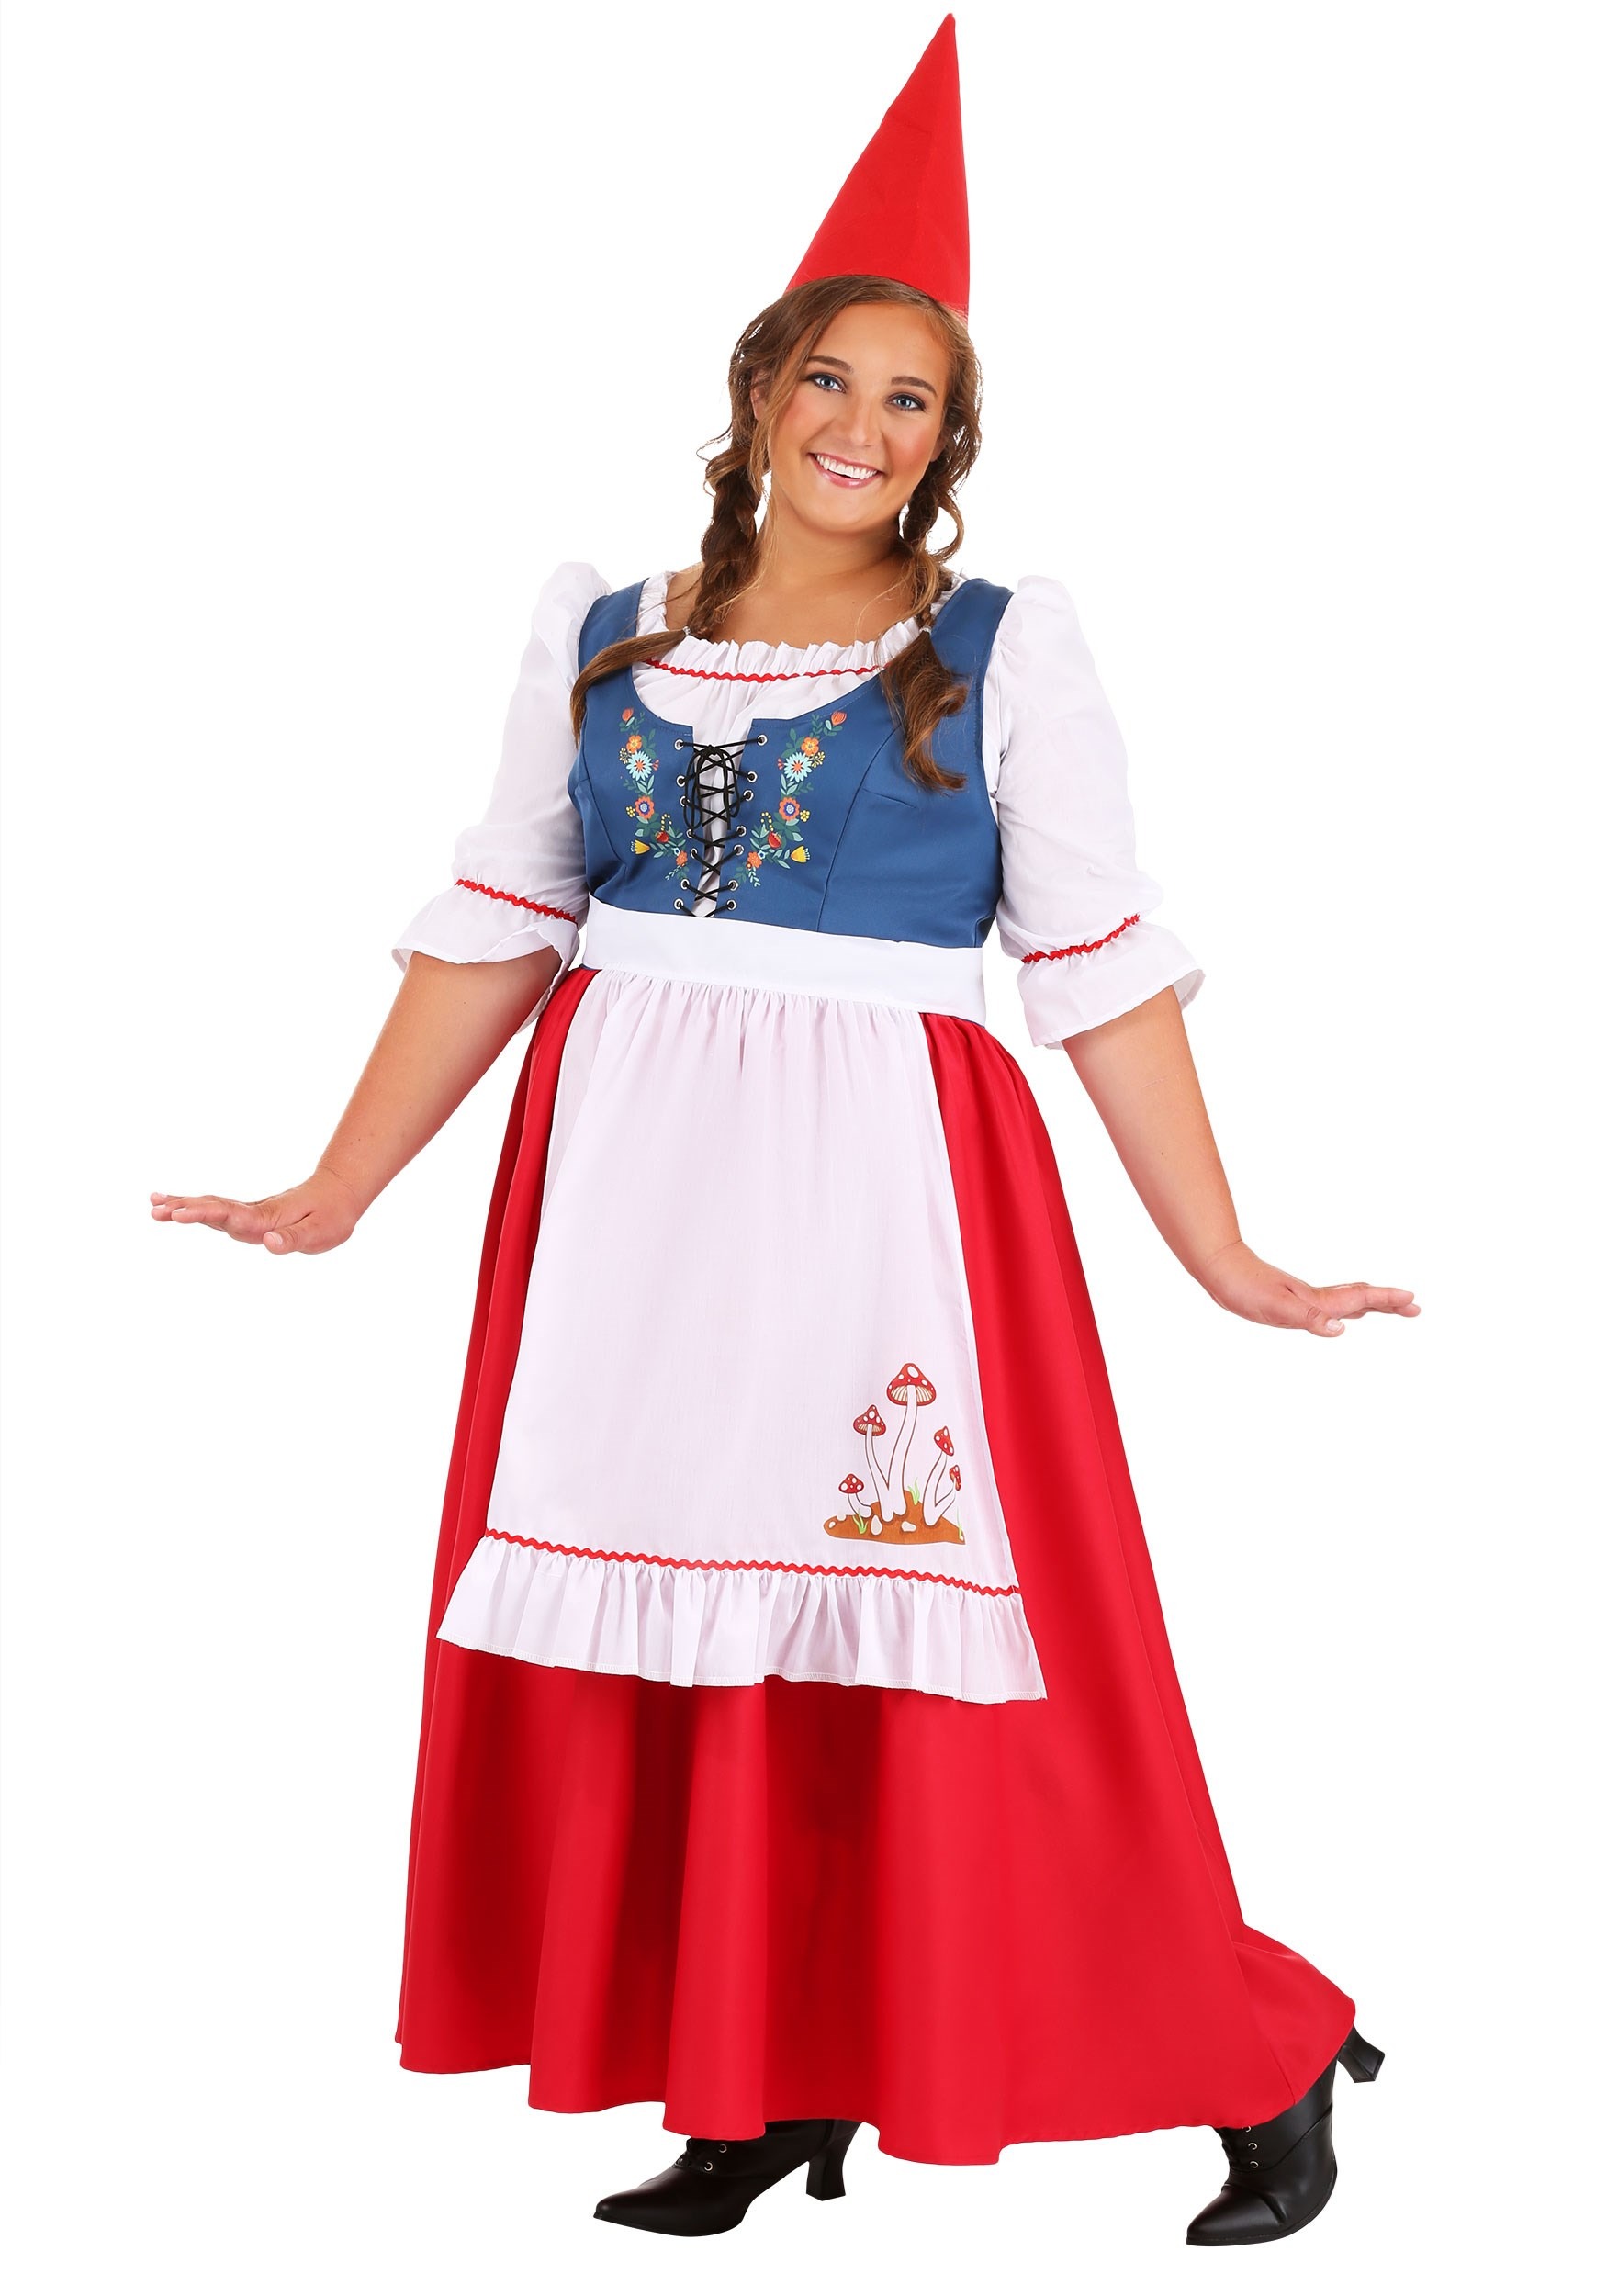 Photos - Fancy Dress FUN Costumes Plus Size Garden Gnome Women's Costume Blue/Red/White